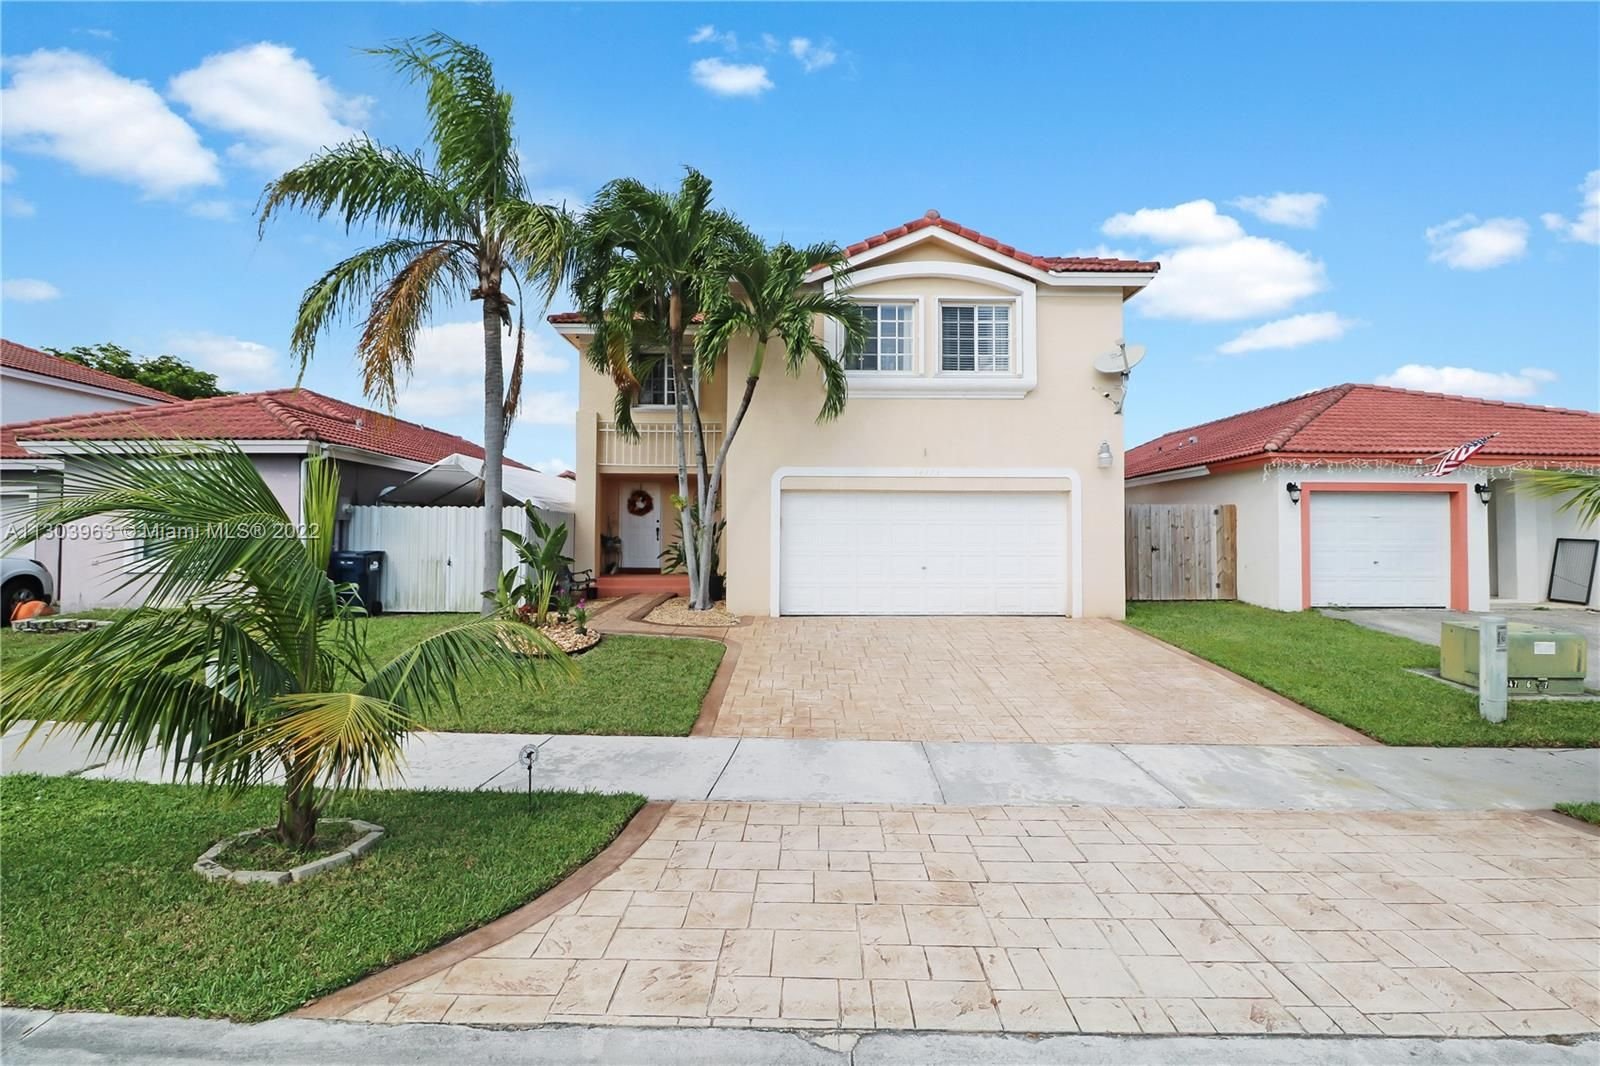 Real estate property located at 14323 177th St, Miami-Dade County, Miami, FL